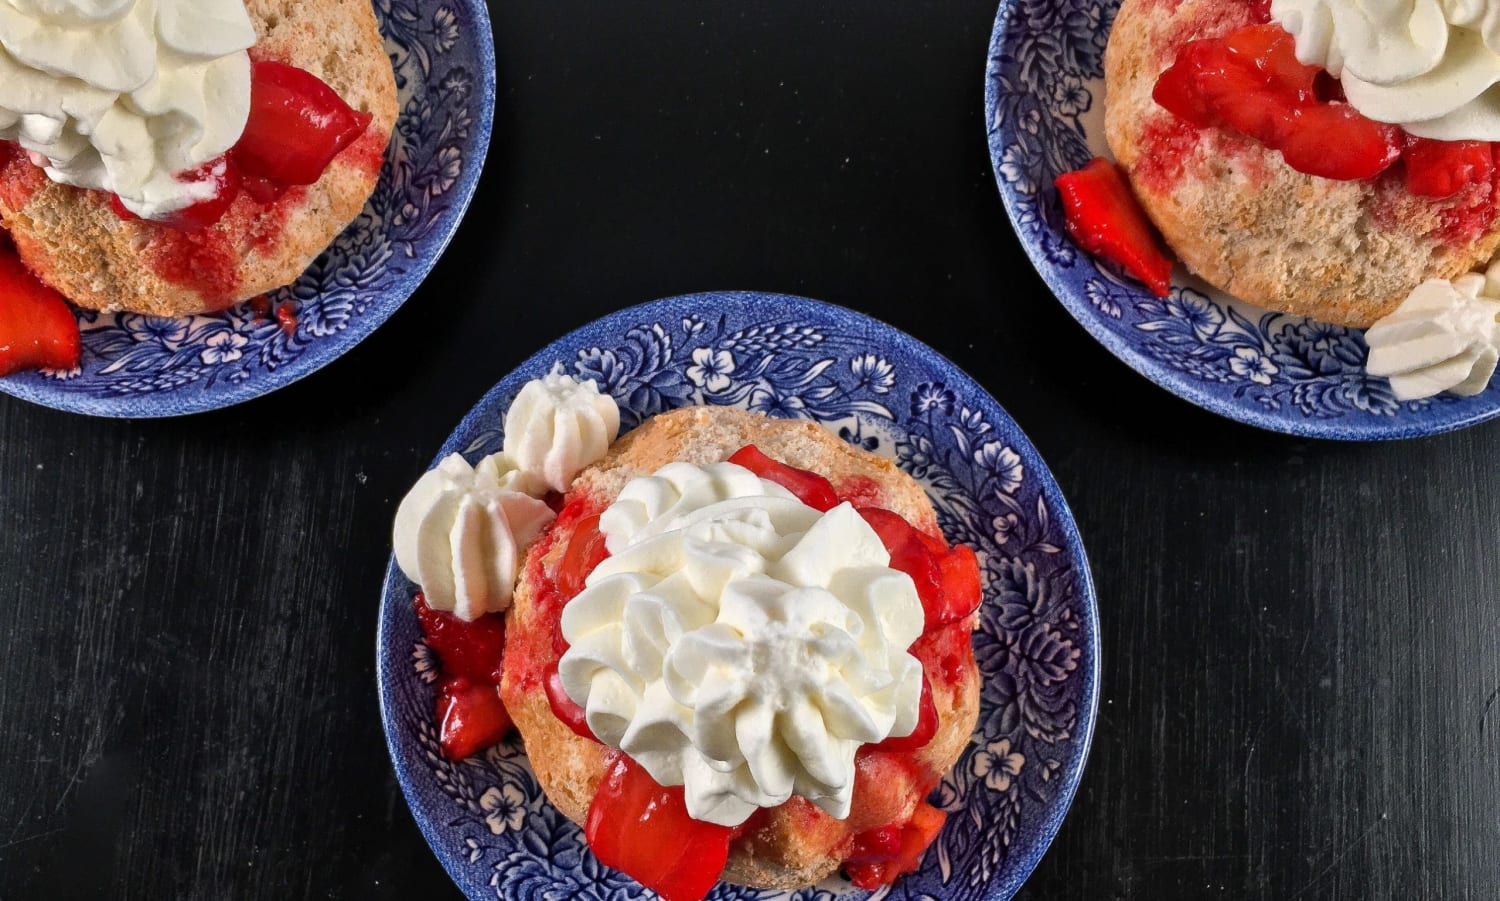 Strawberry Shortcake with No Added Sugar - Summer Yule Nutrition